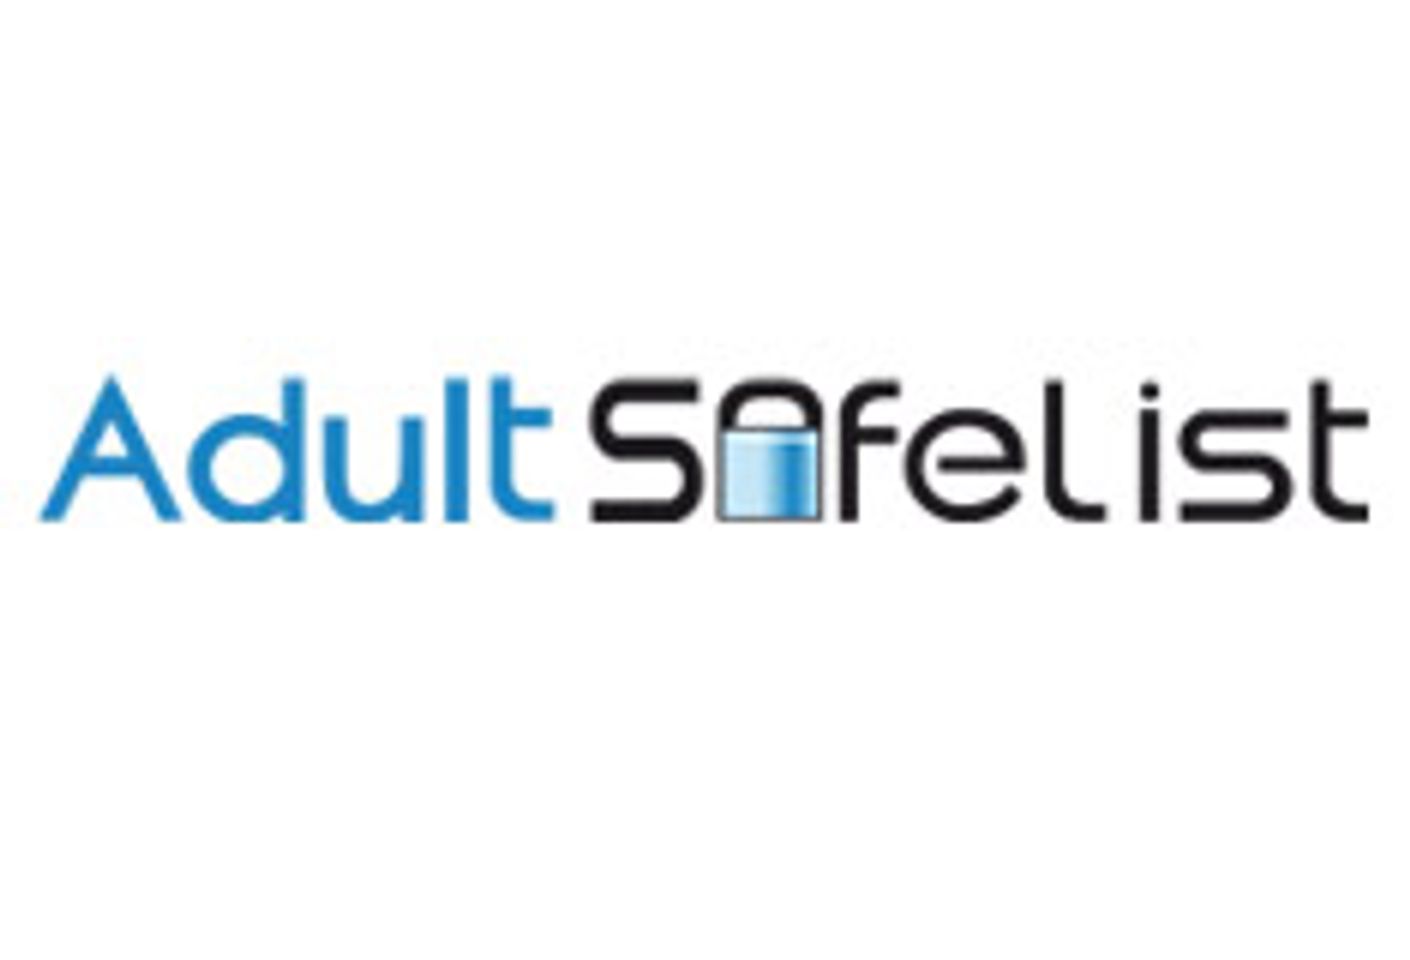 Adult Safe List Launches